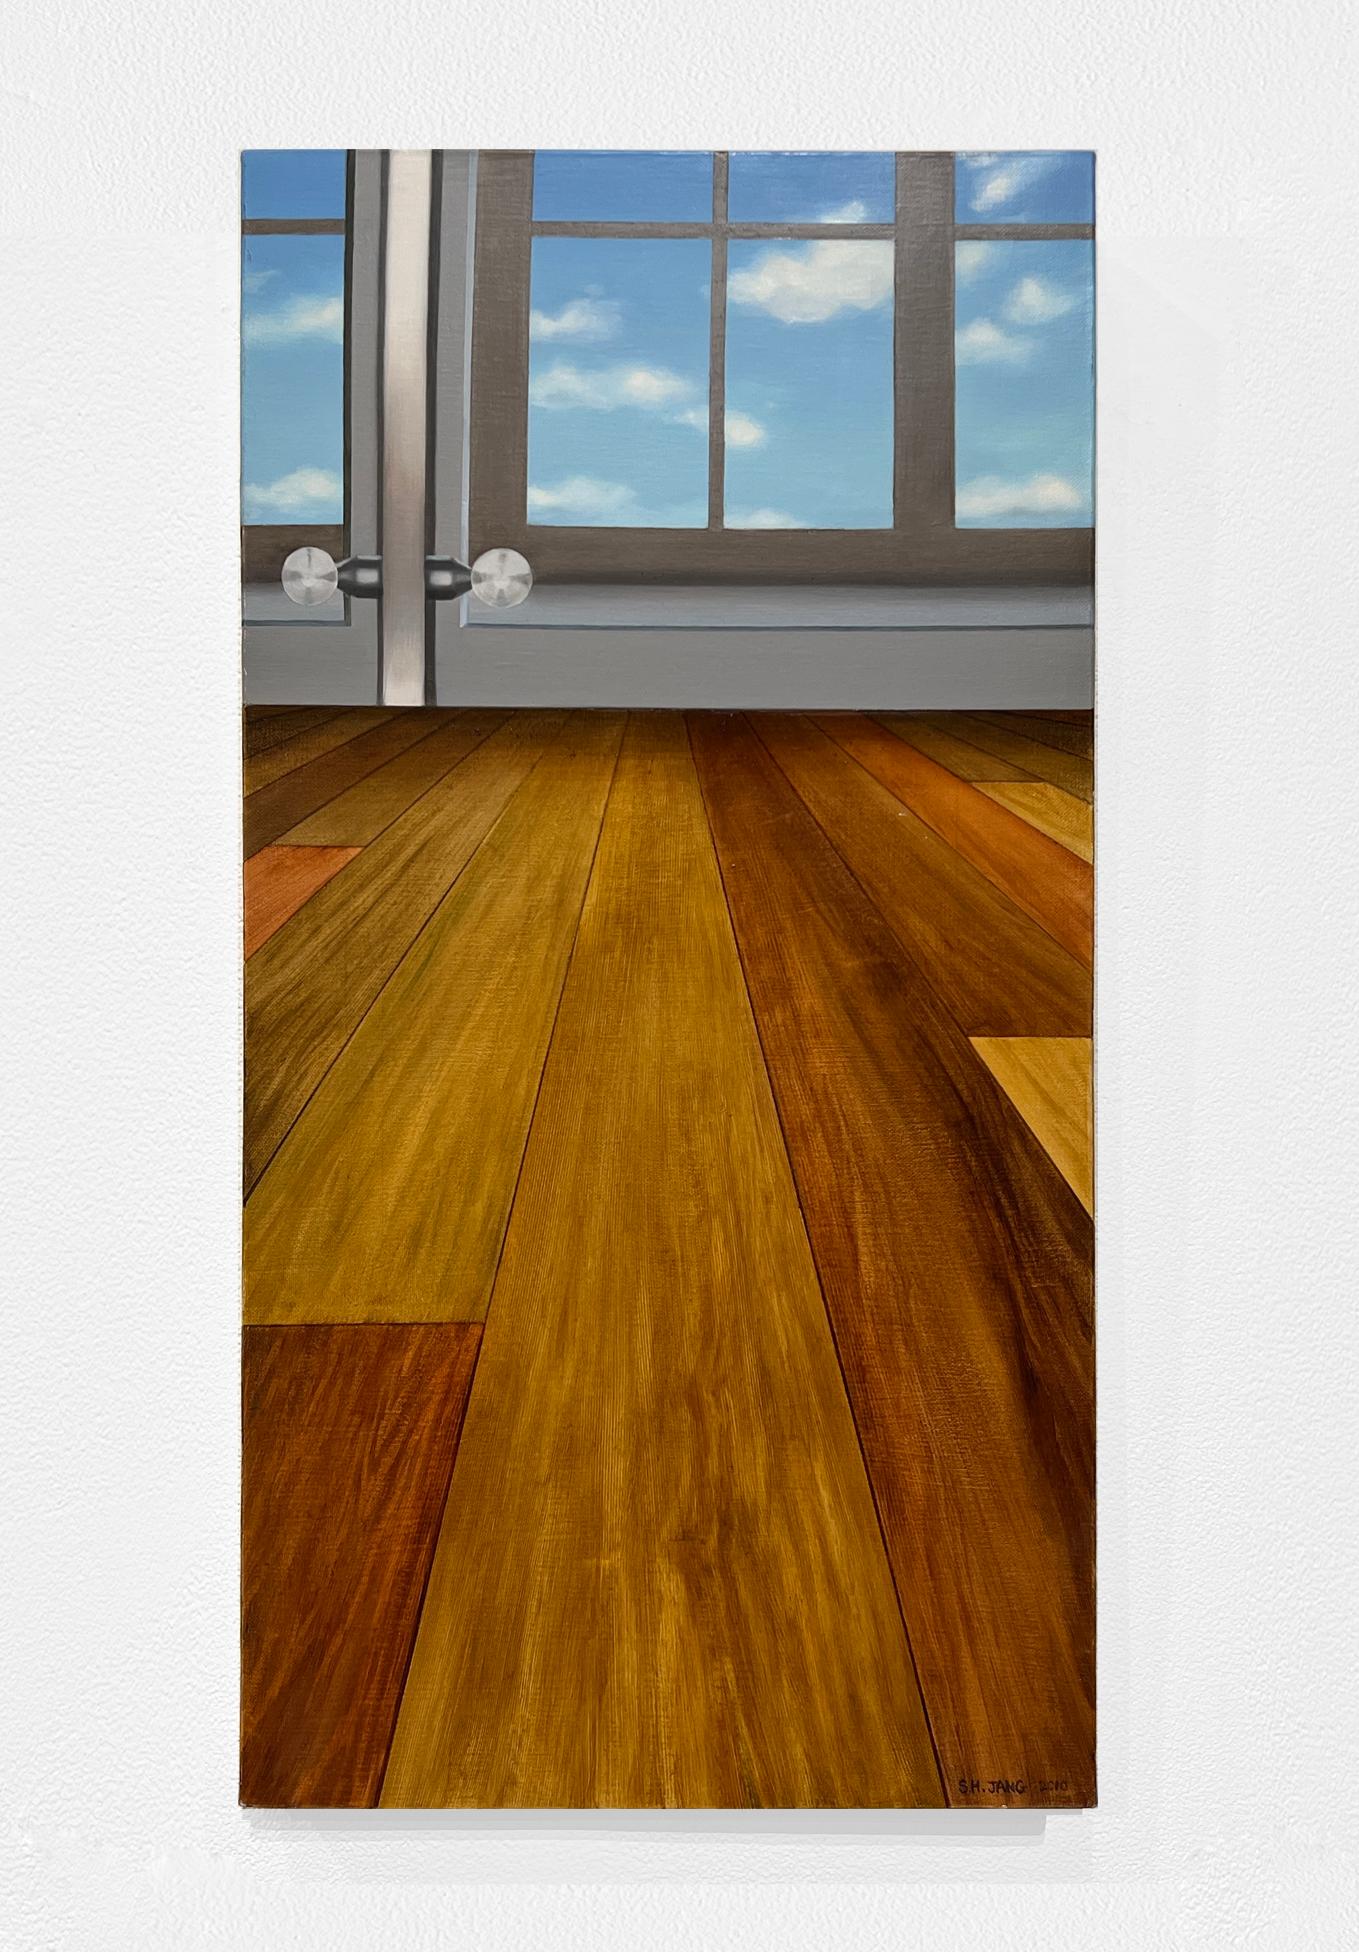 SKY IN LIVING ROOM – zeitgenössischer Realismus/Interieurszene mit Fenster – Painting von Sunghee Jang